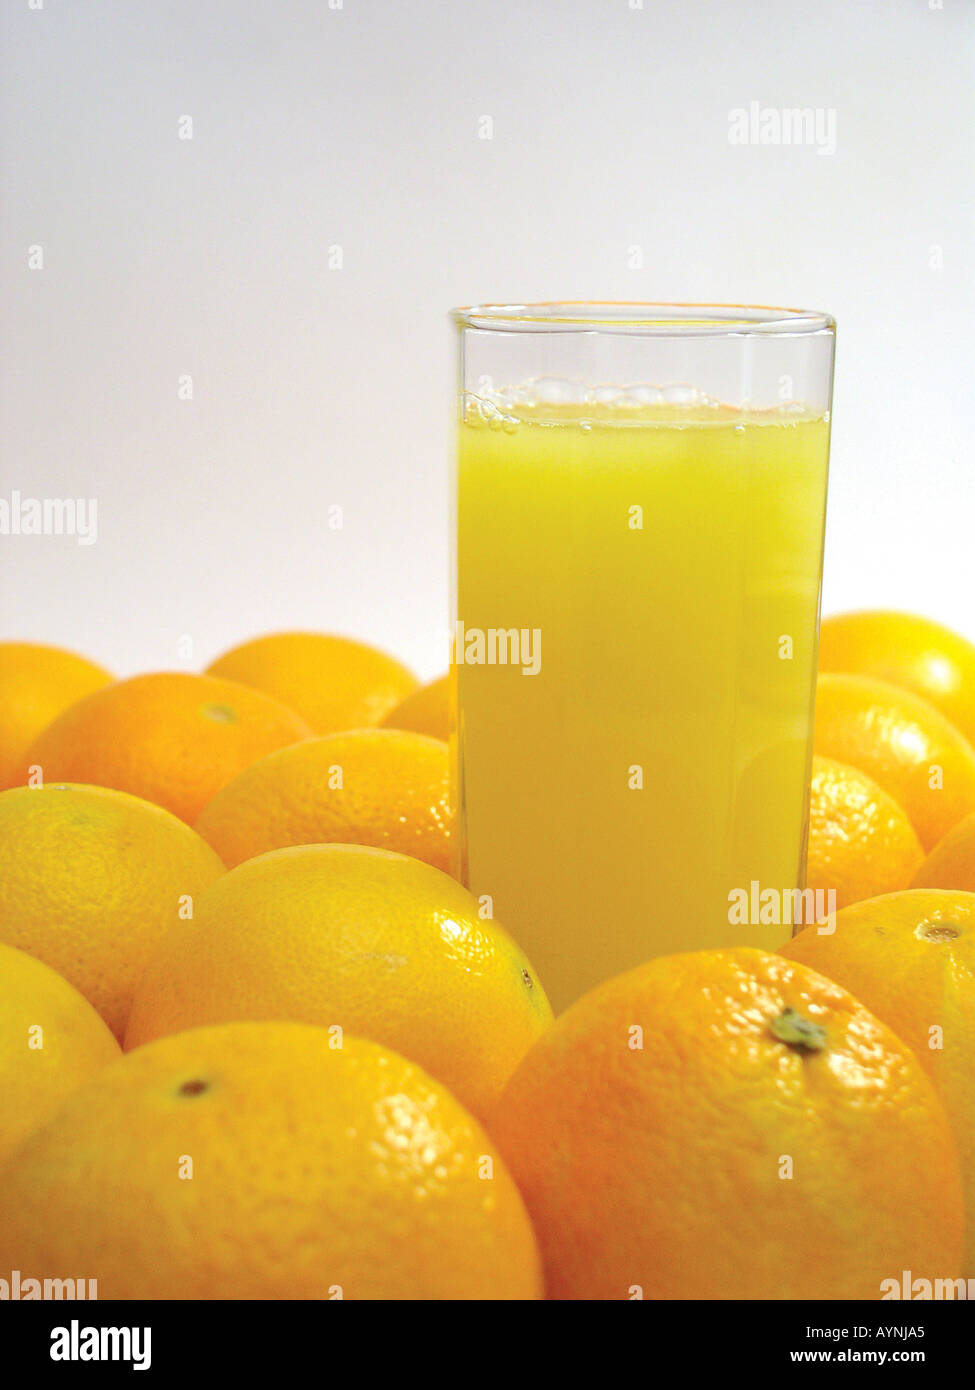 Frisch gepresster orangensaft hi-res stock photography and images - Alamy